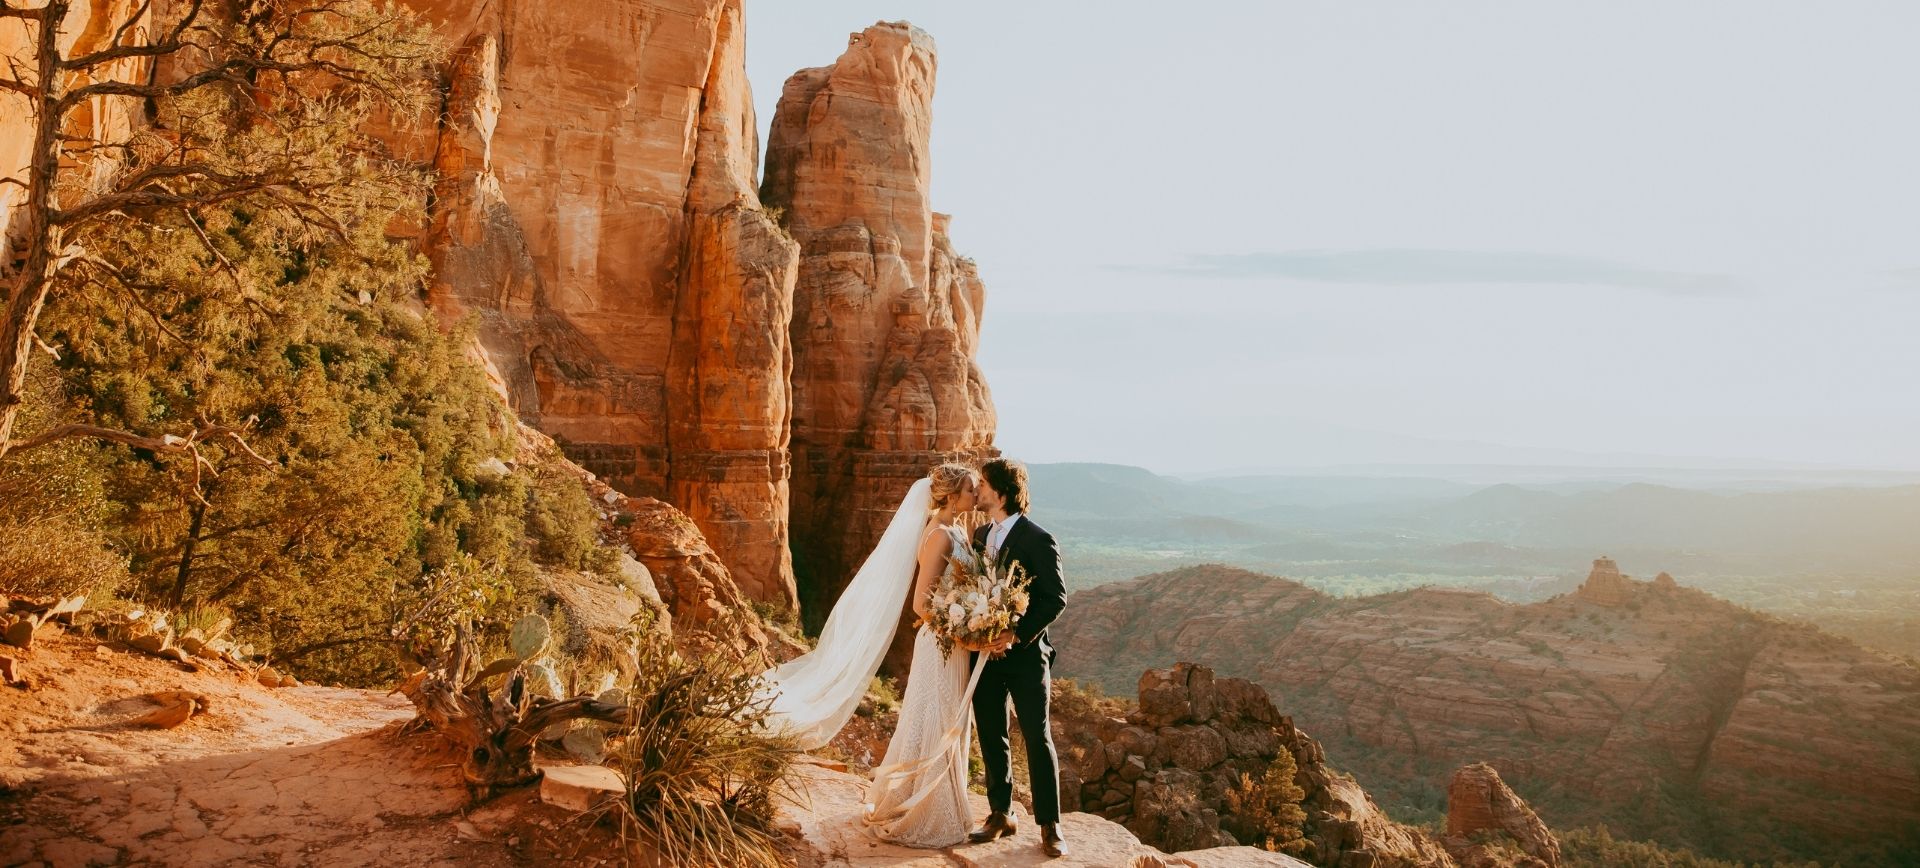 sedona elopement at cathedral rock - arizona wedding package